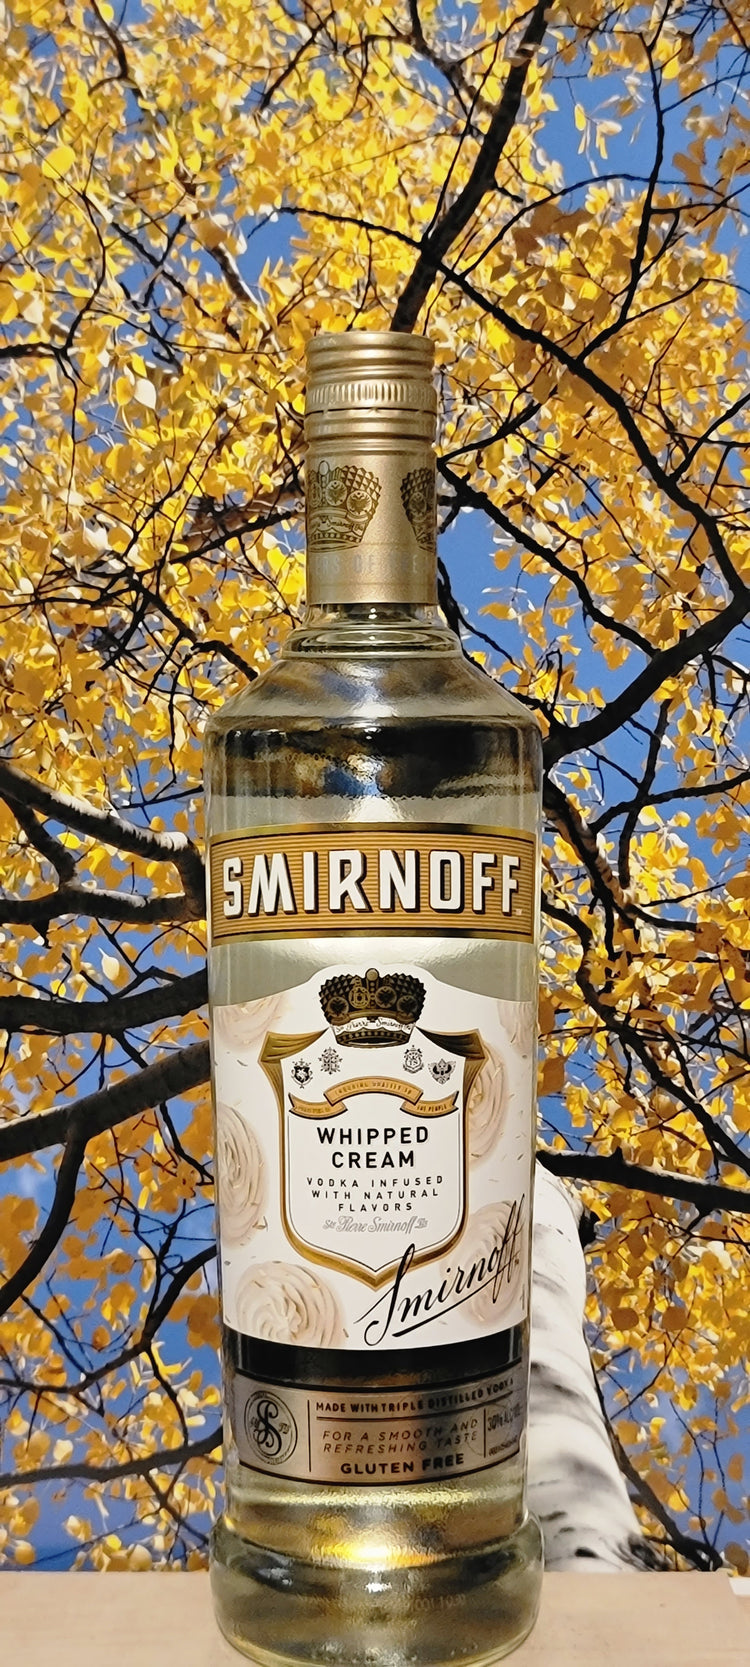 Smirnoff whipped cream vodka